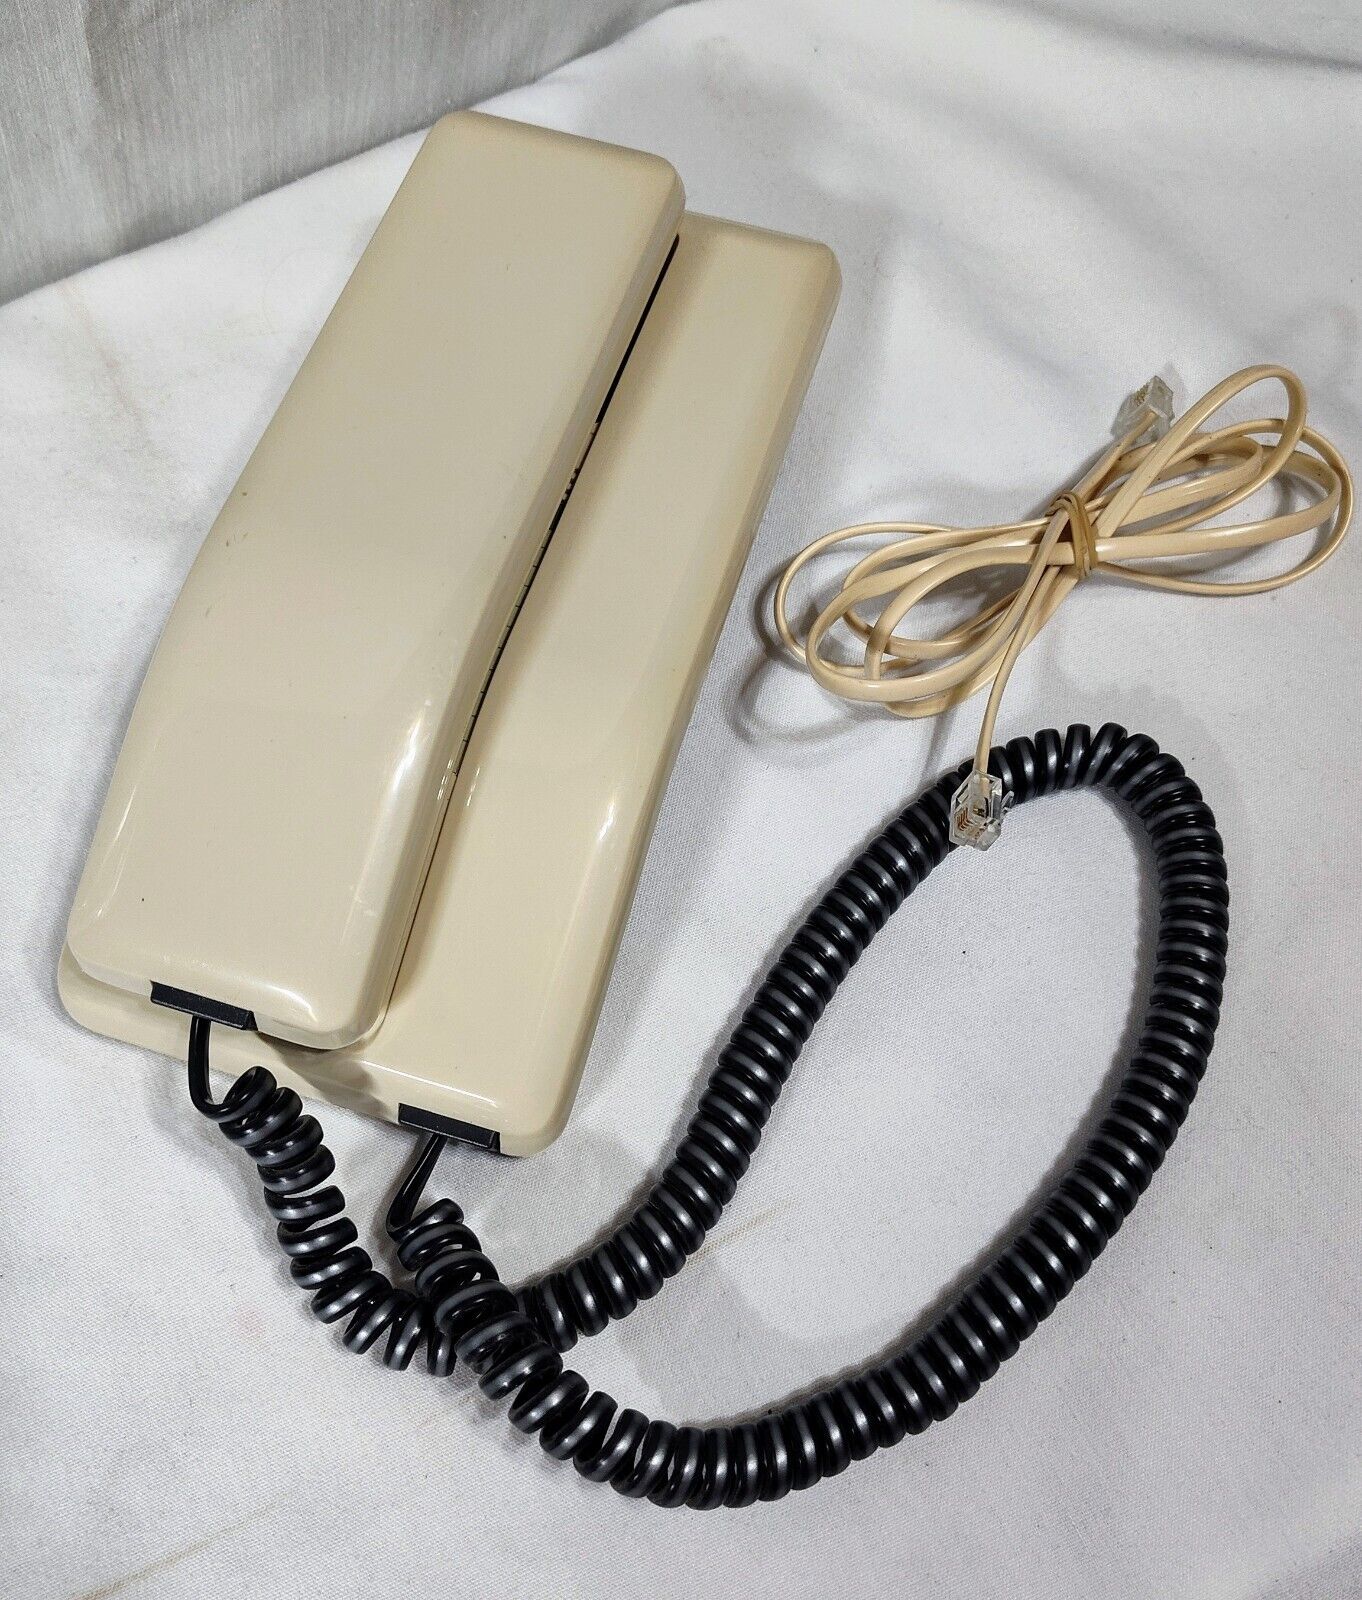 VINTAGE NORTHERN TELECOM SYMPHONY 1000 PUSH BUTTON DESK PHONE 